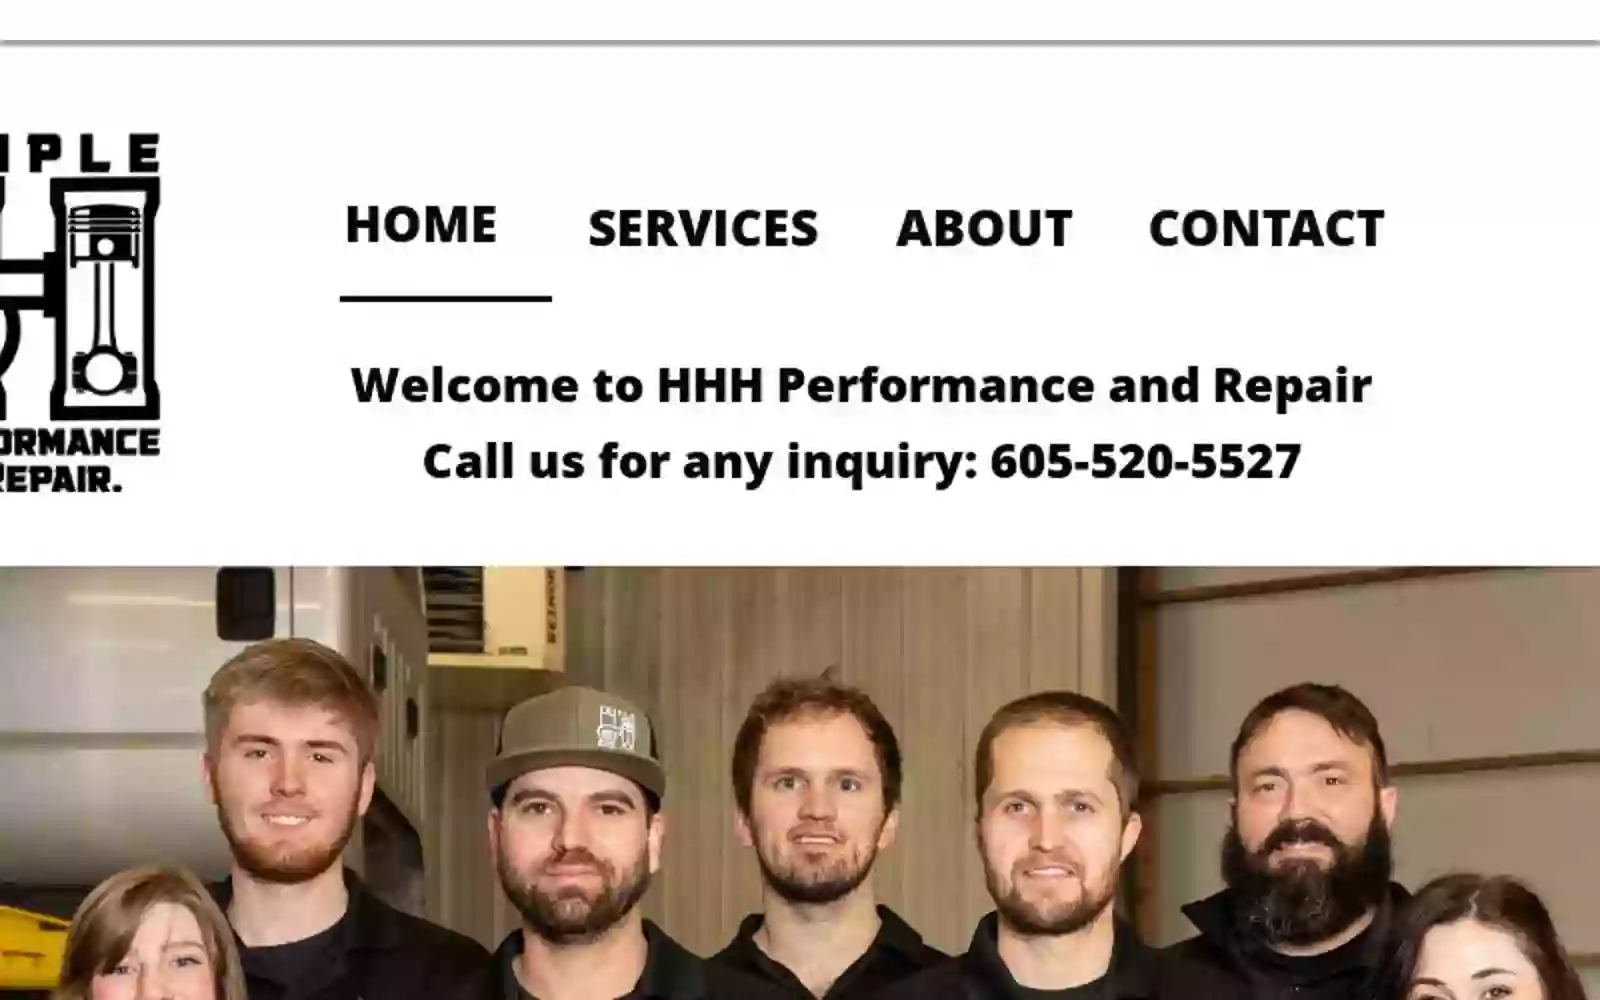 HHH Performance and Repair